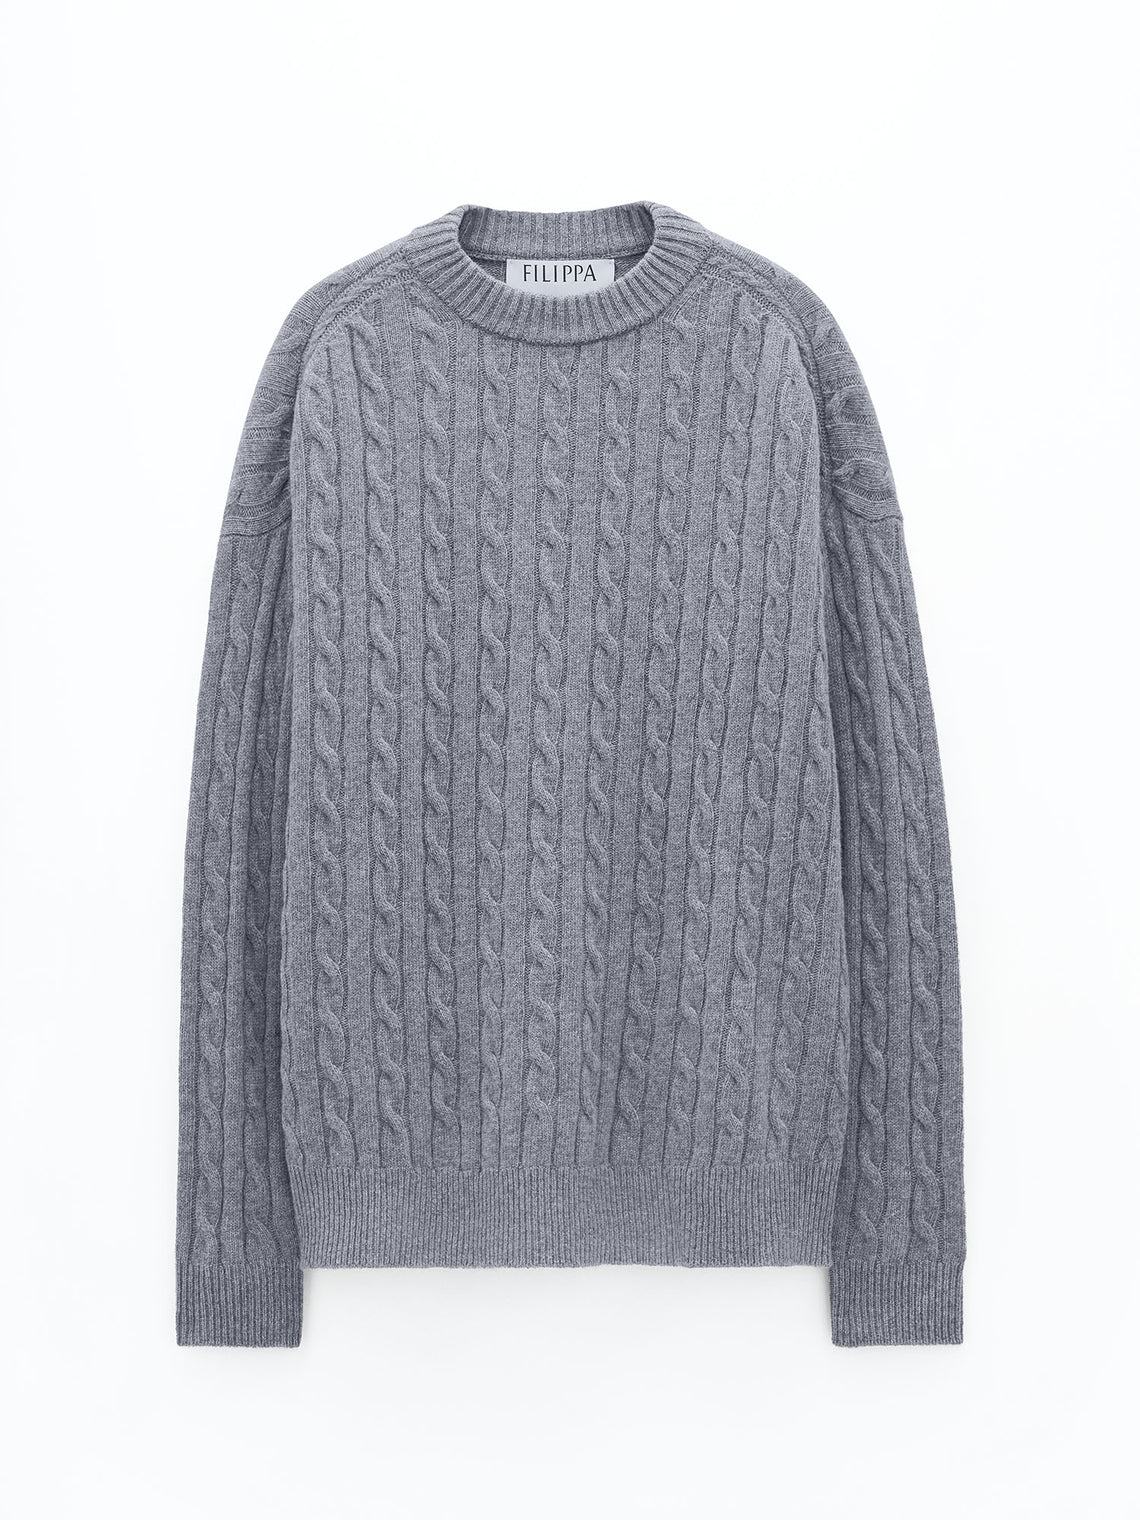 Braided sweater by Filippa K in mid grey